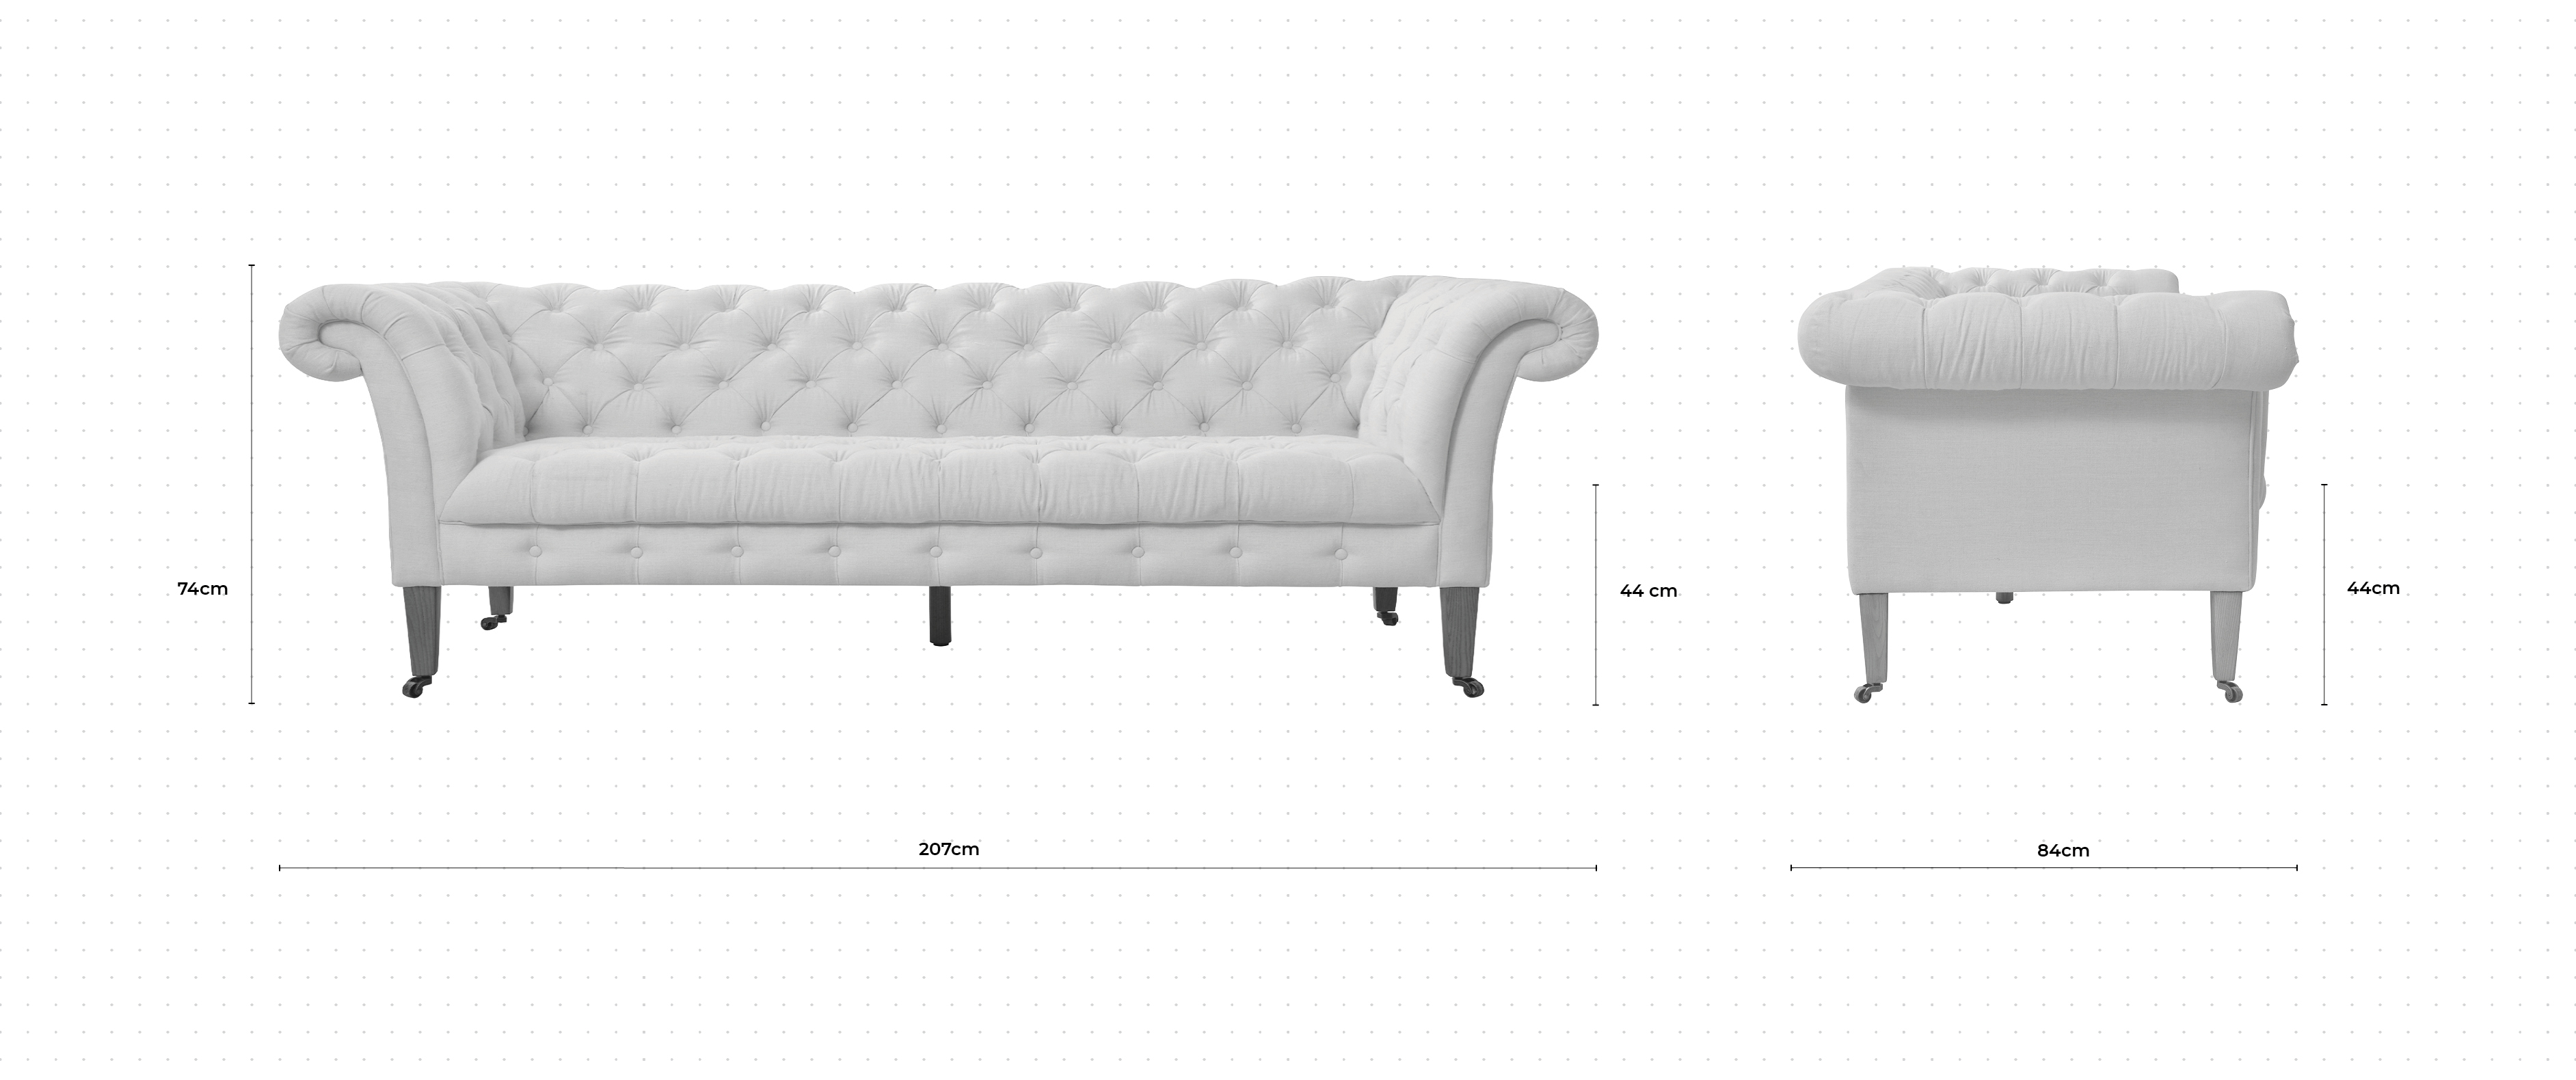 Blenheim 3 Seater Sofa dimensions